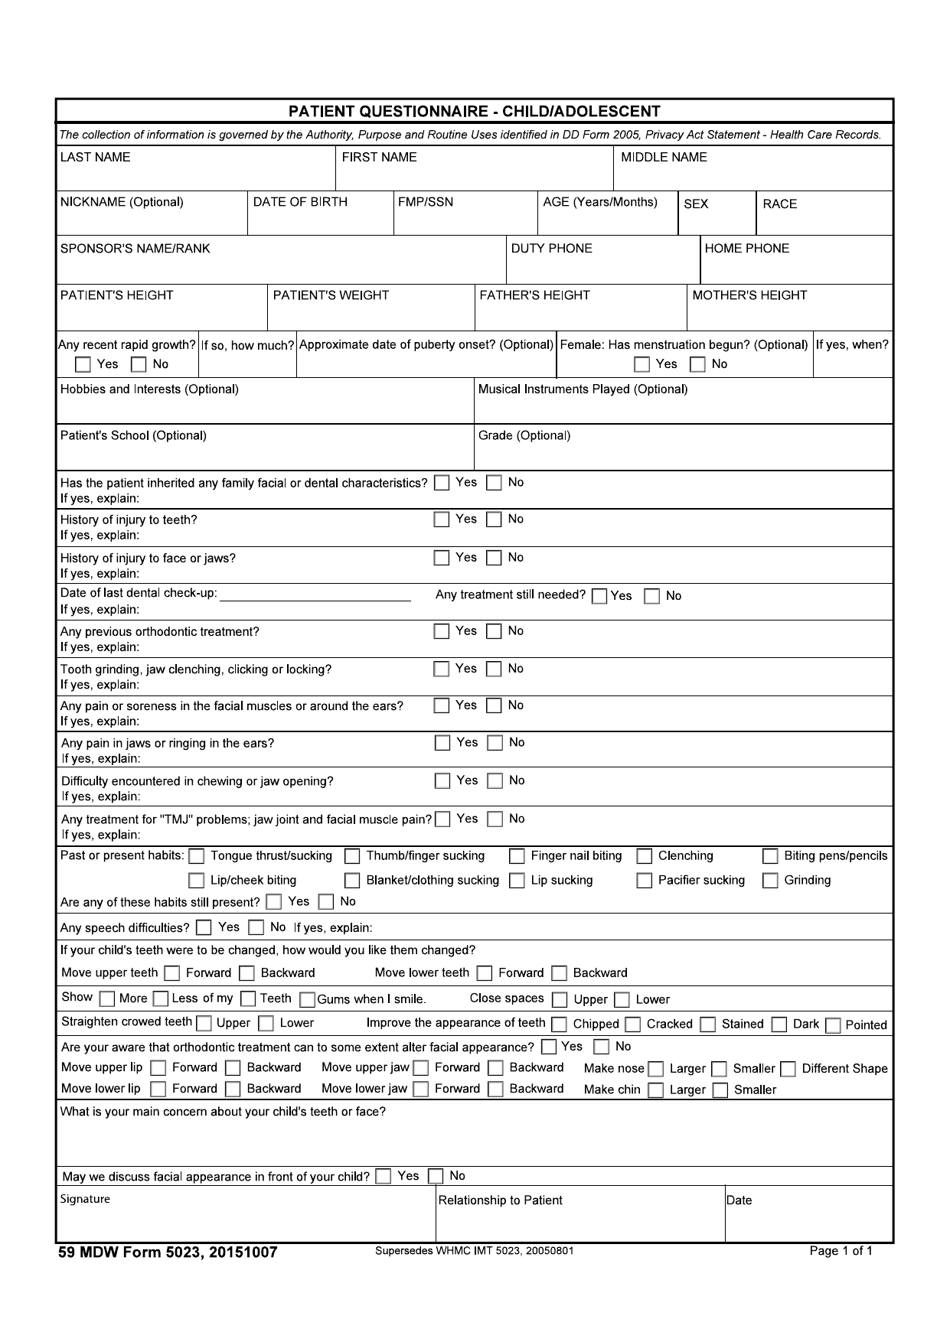 59 MDW Form 5023 Patient Questionnaire - Child/Adolescent, Page 1